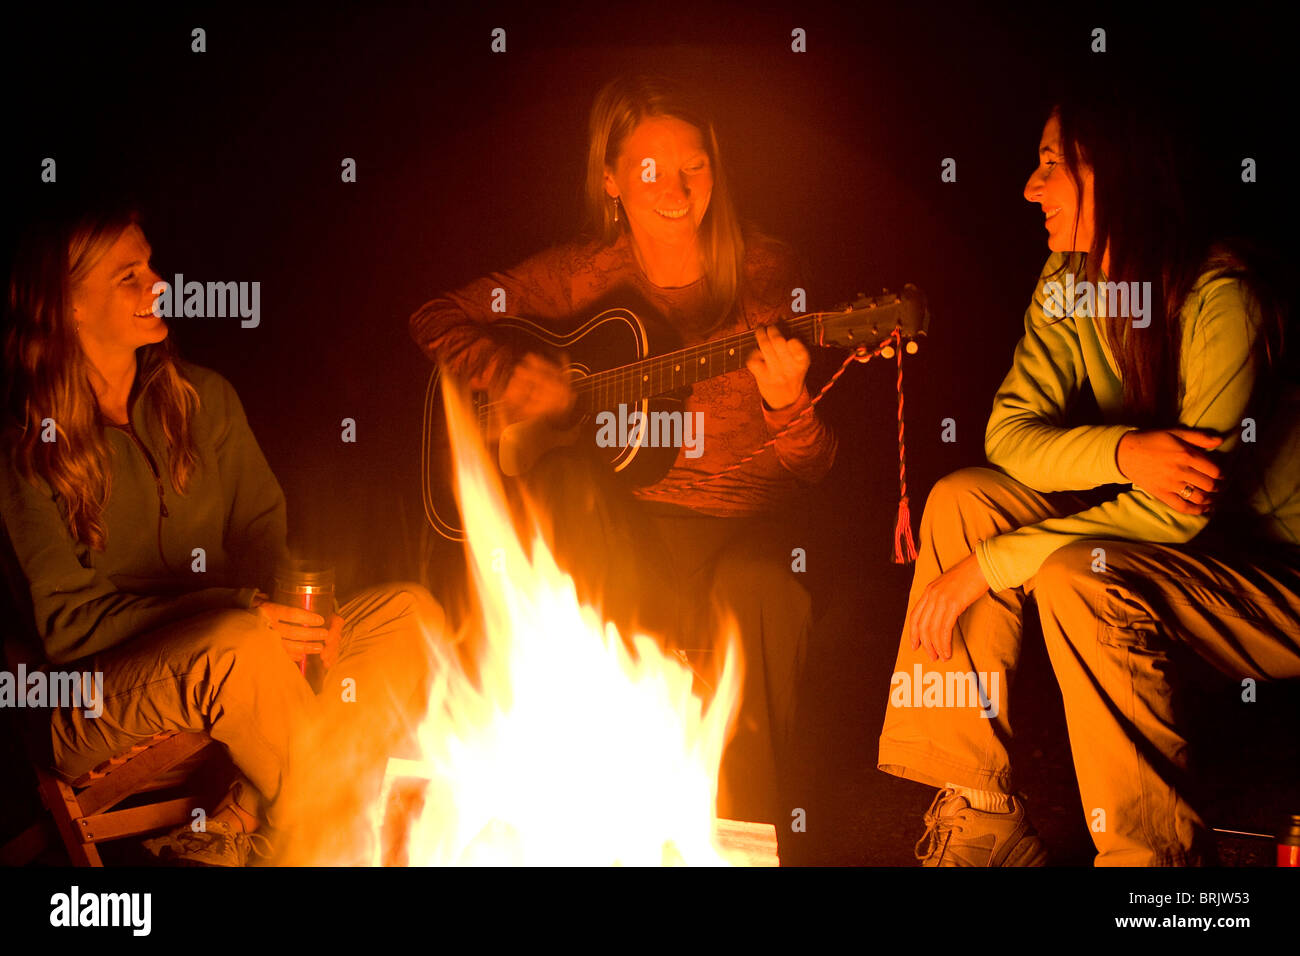 Two women listen, as a third plays the guitar beside a campfire. Stock Photo